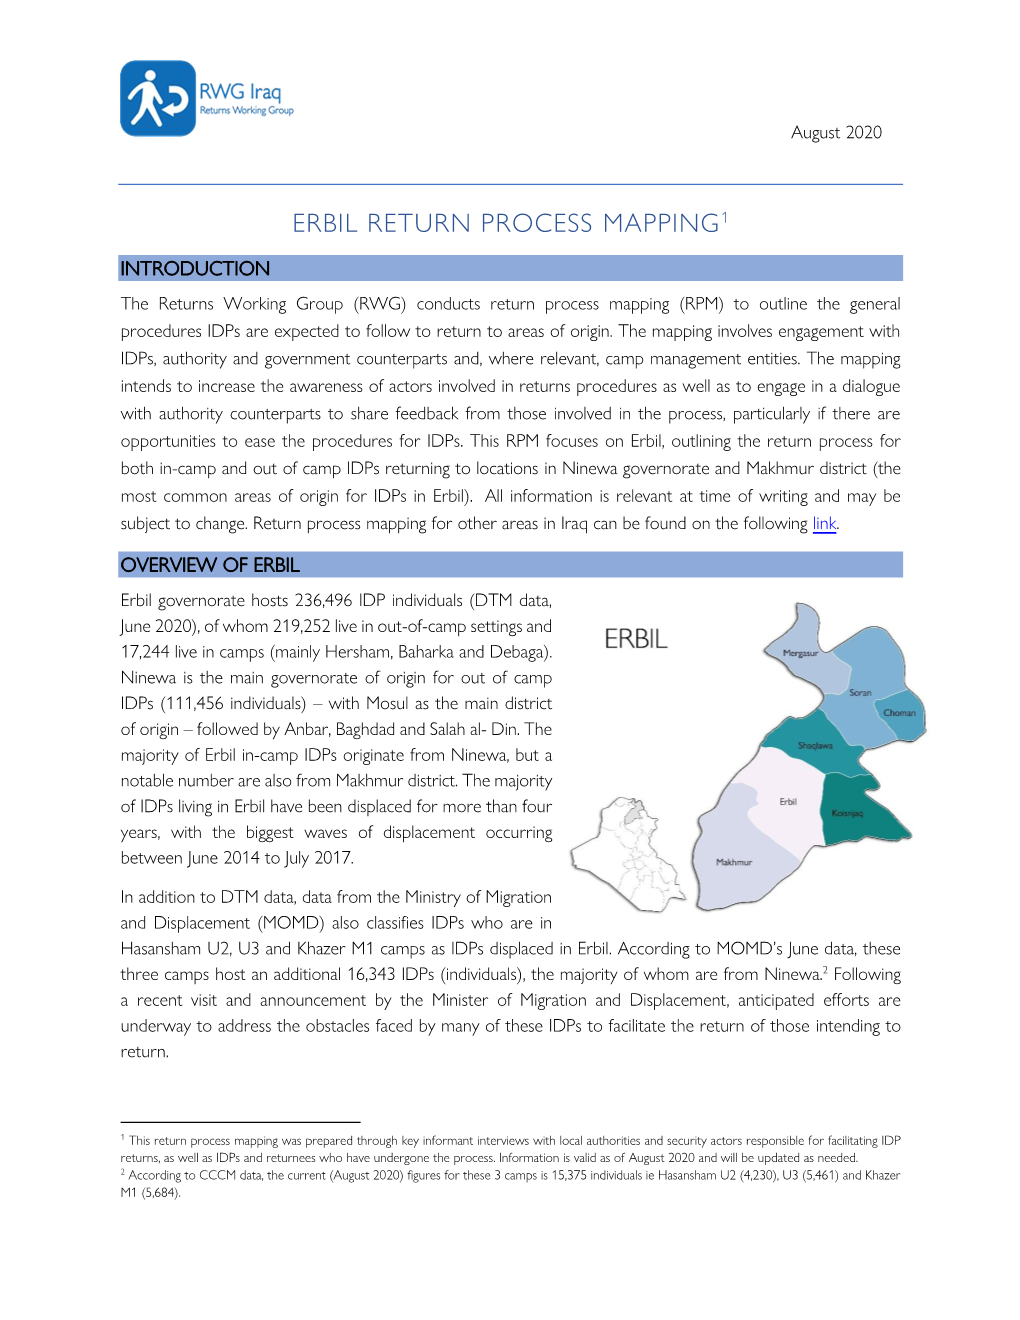 Erbil Return Process Mapping Report Aug 2020.Pdf